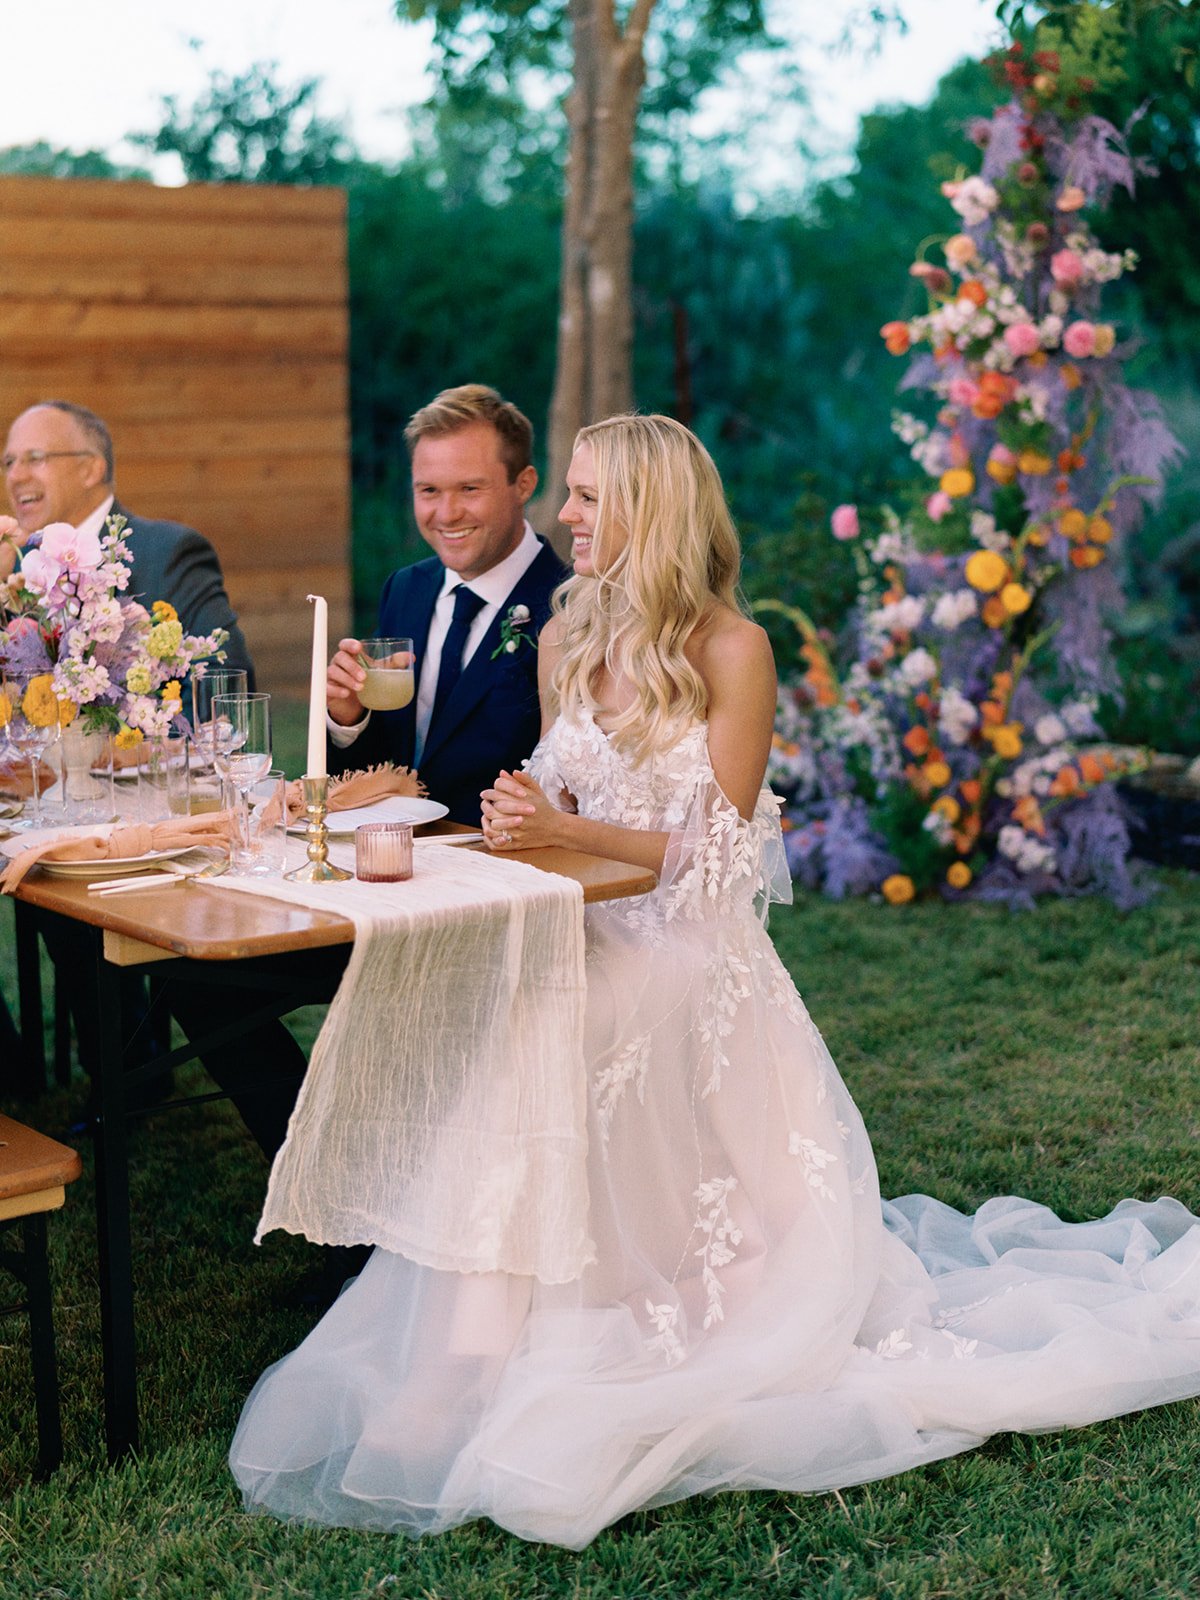 Best-Austin-Wedding-Photographers-Elopement-Film-35mm-Asheville-Santa-Barbara-Backyard-156.jpg